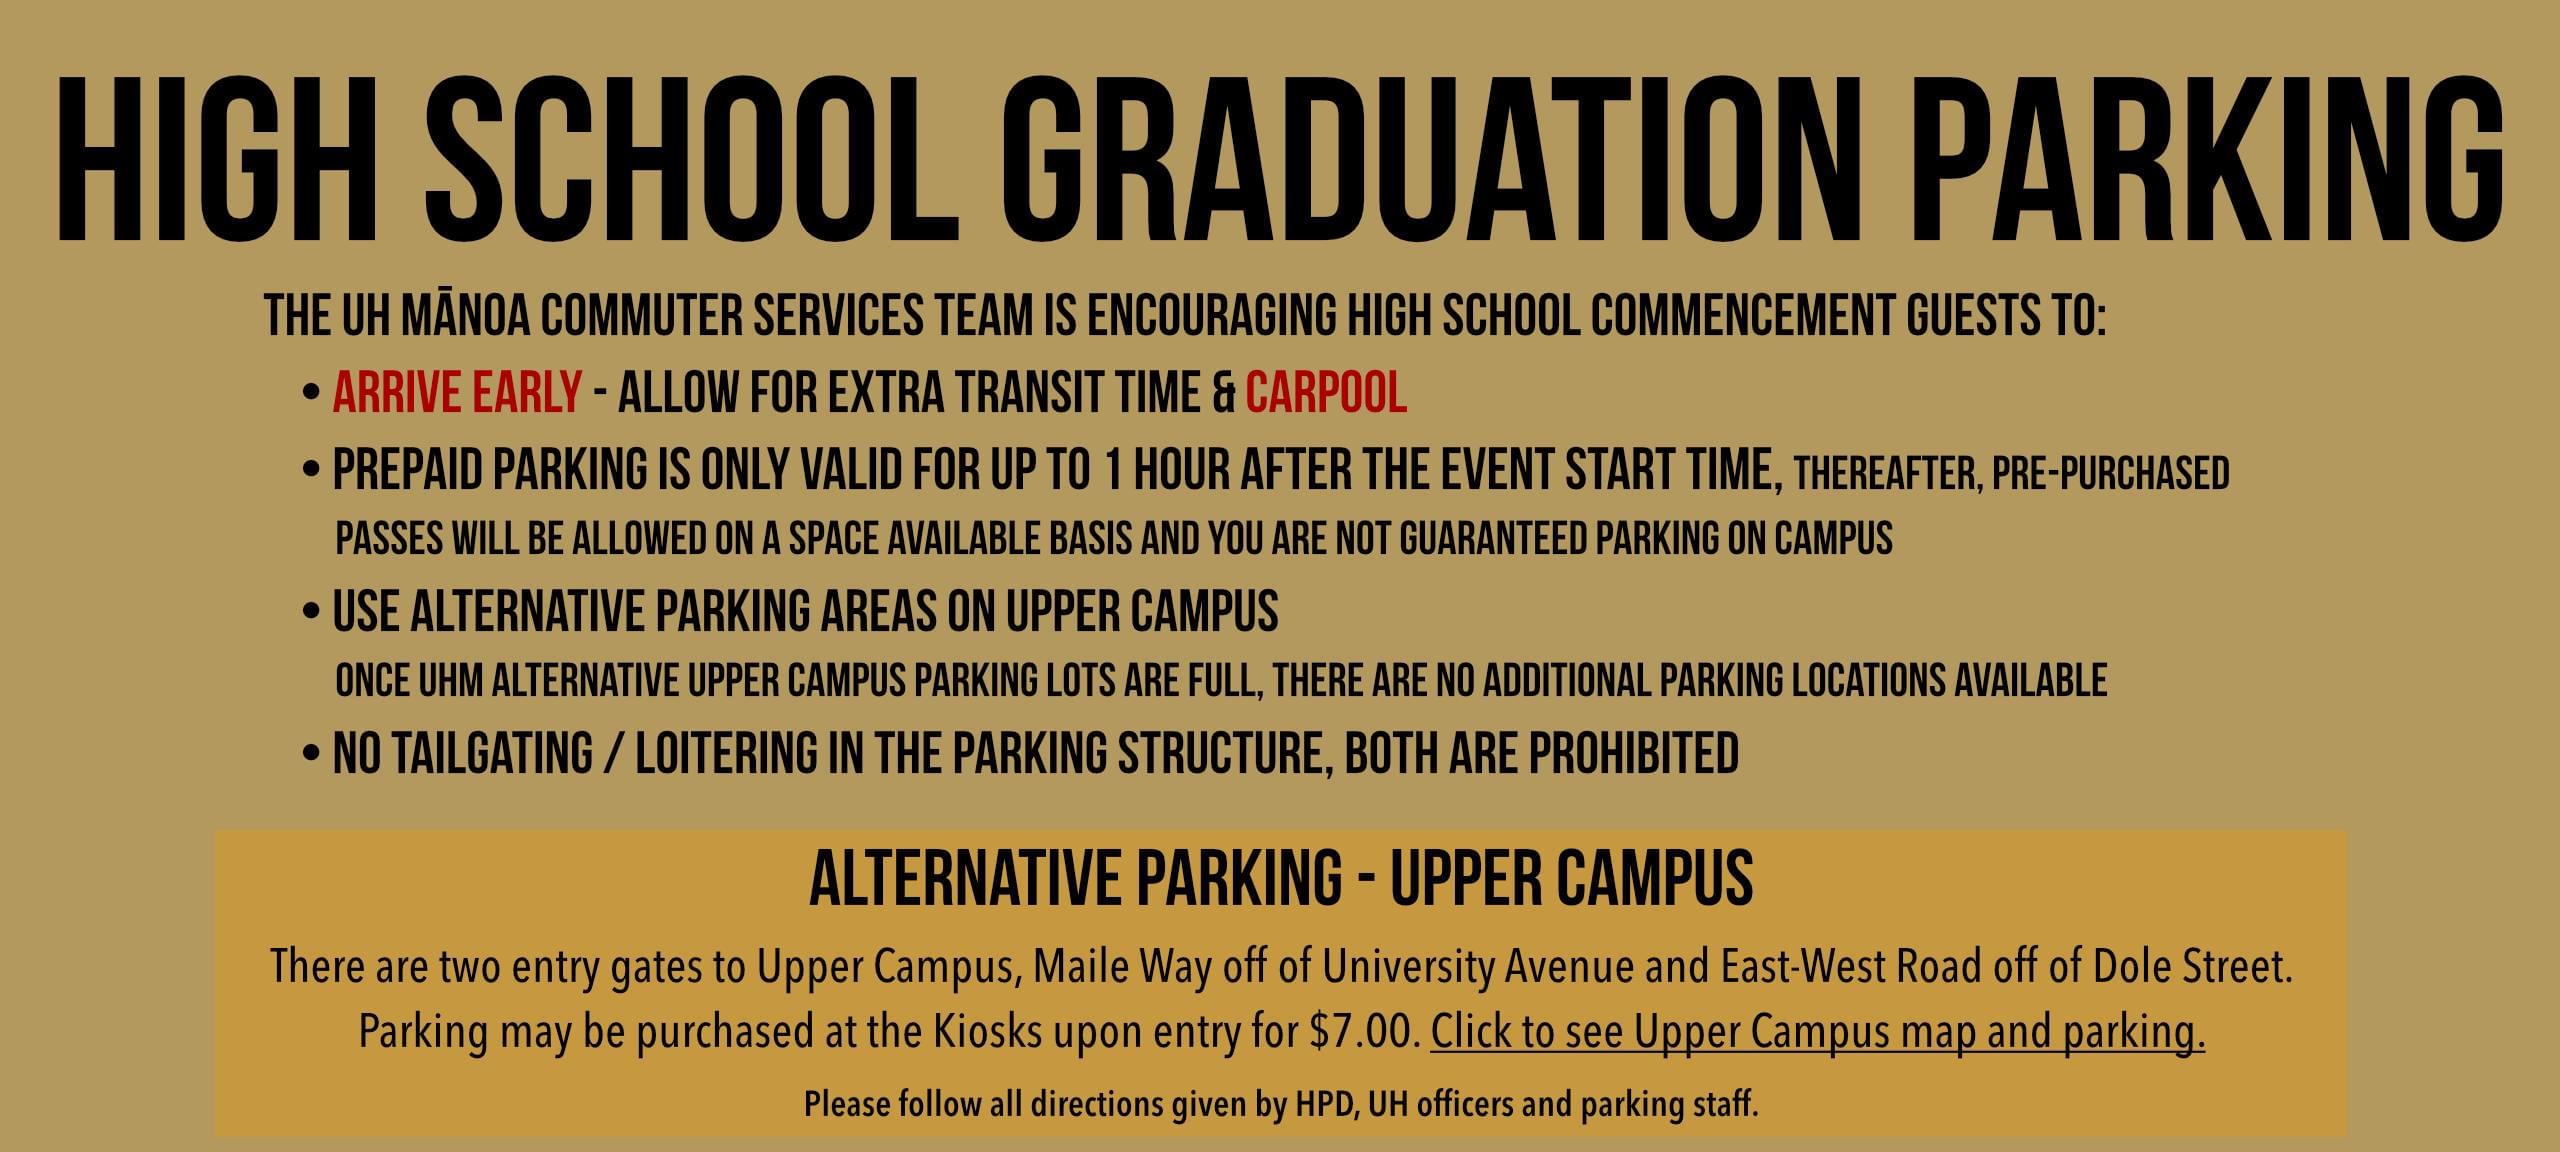 High School Graduation Parking